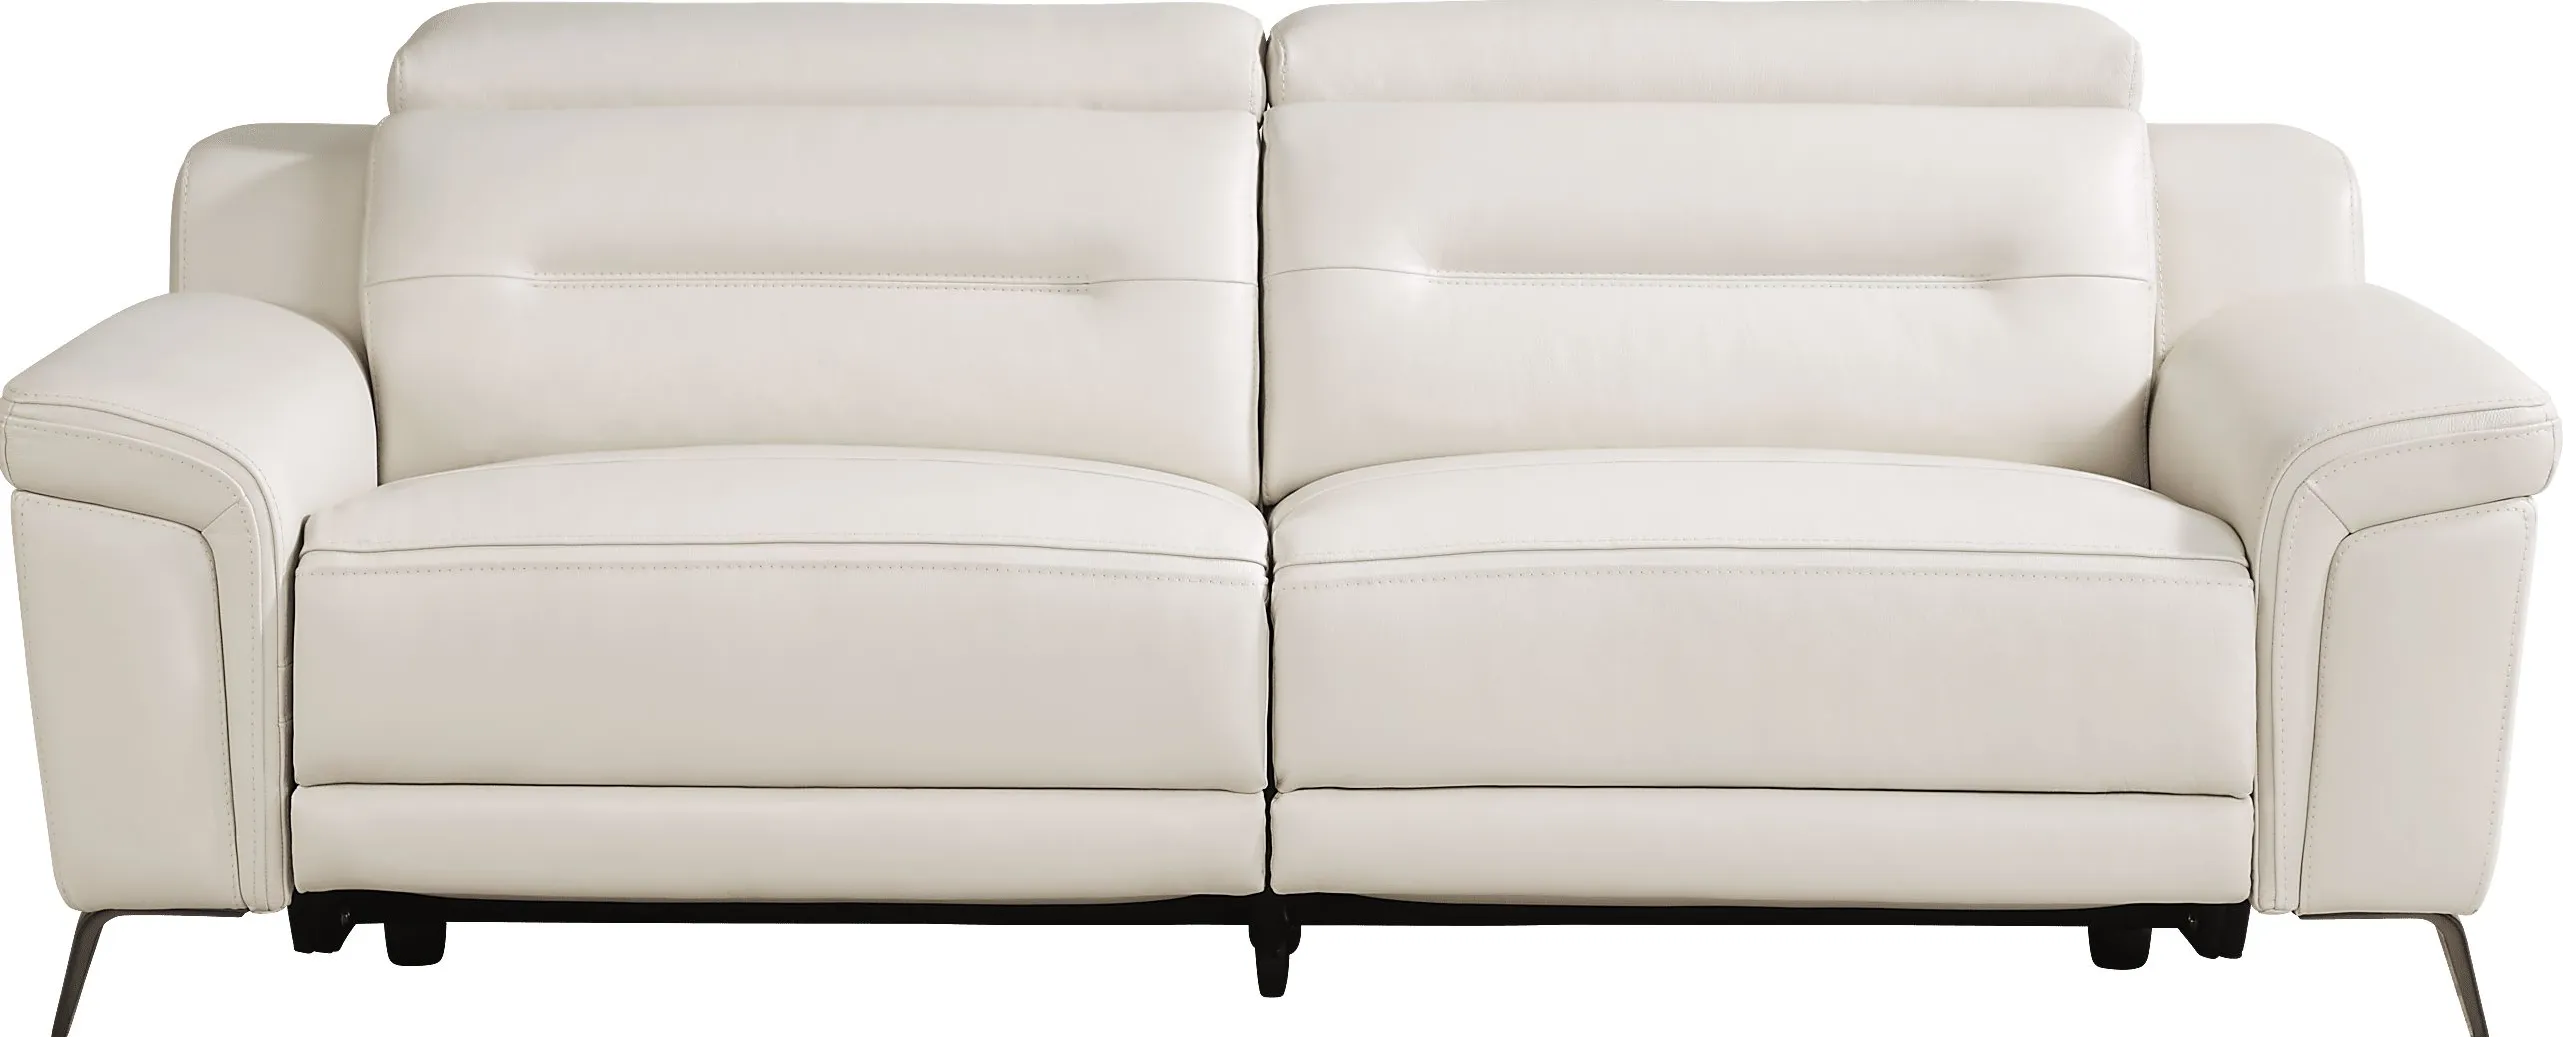 Castella Ivory Leather Dual Power Reclining Sofa